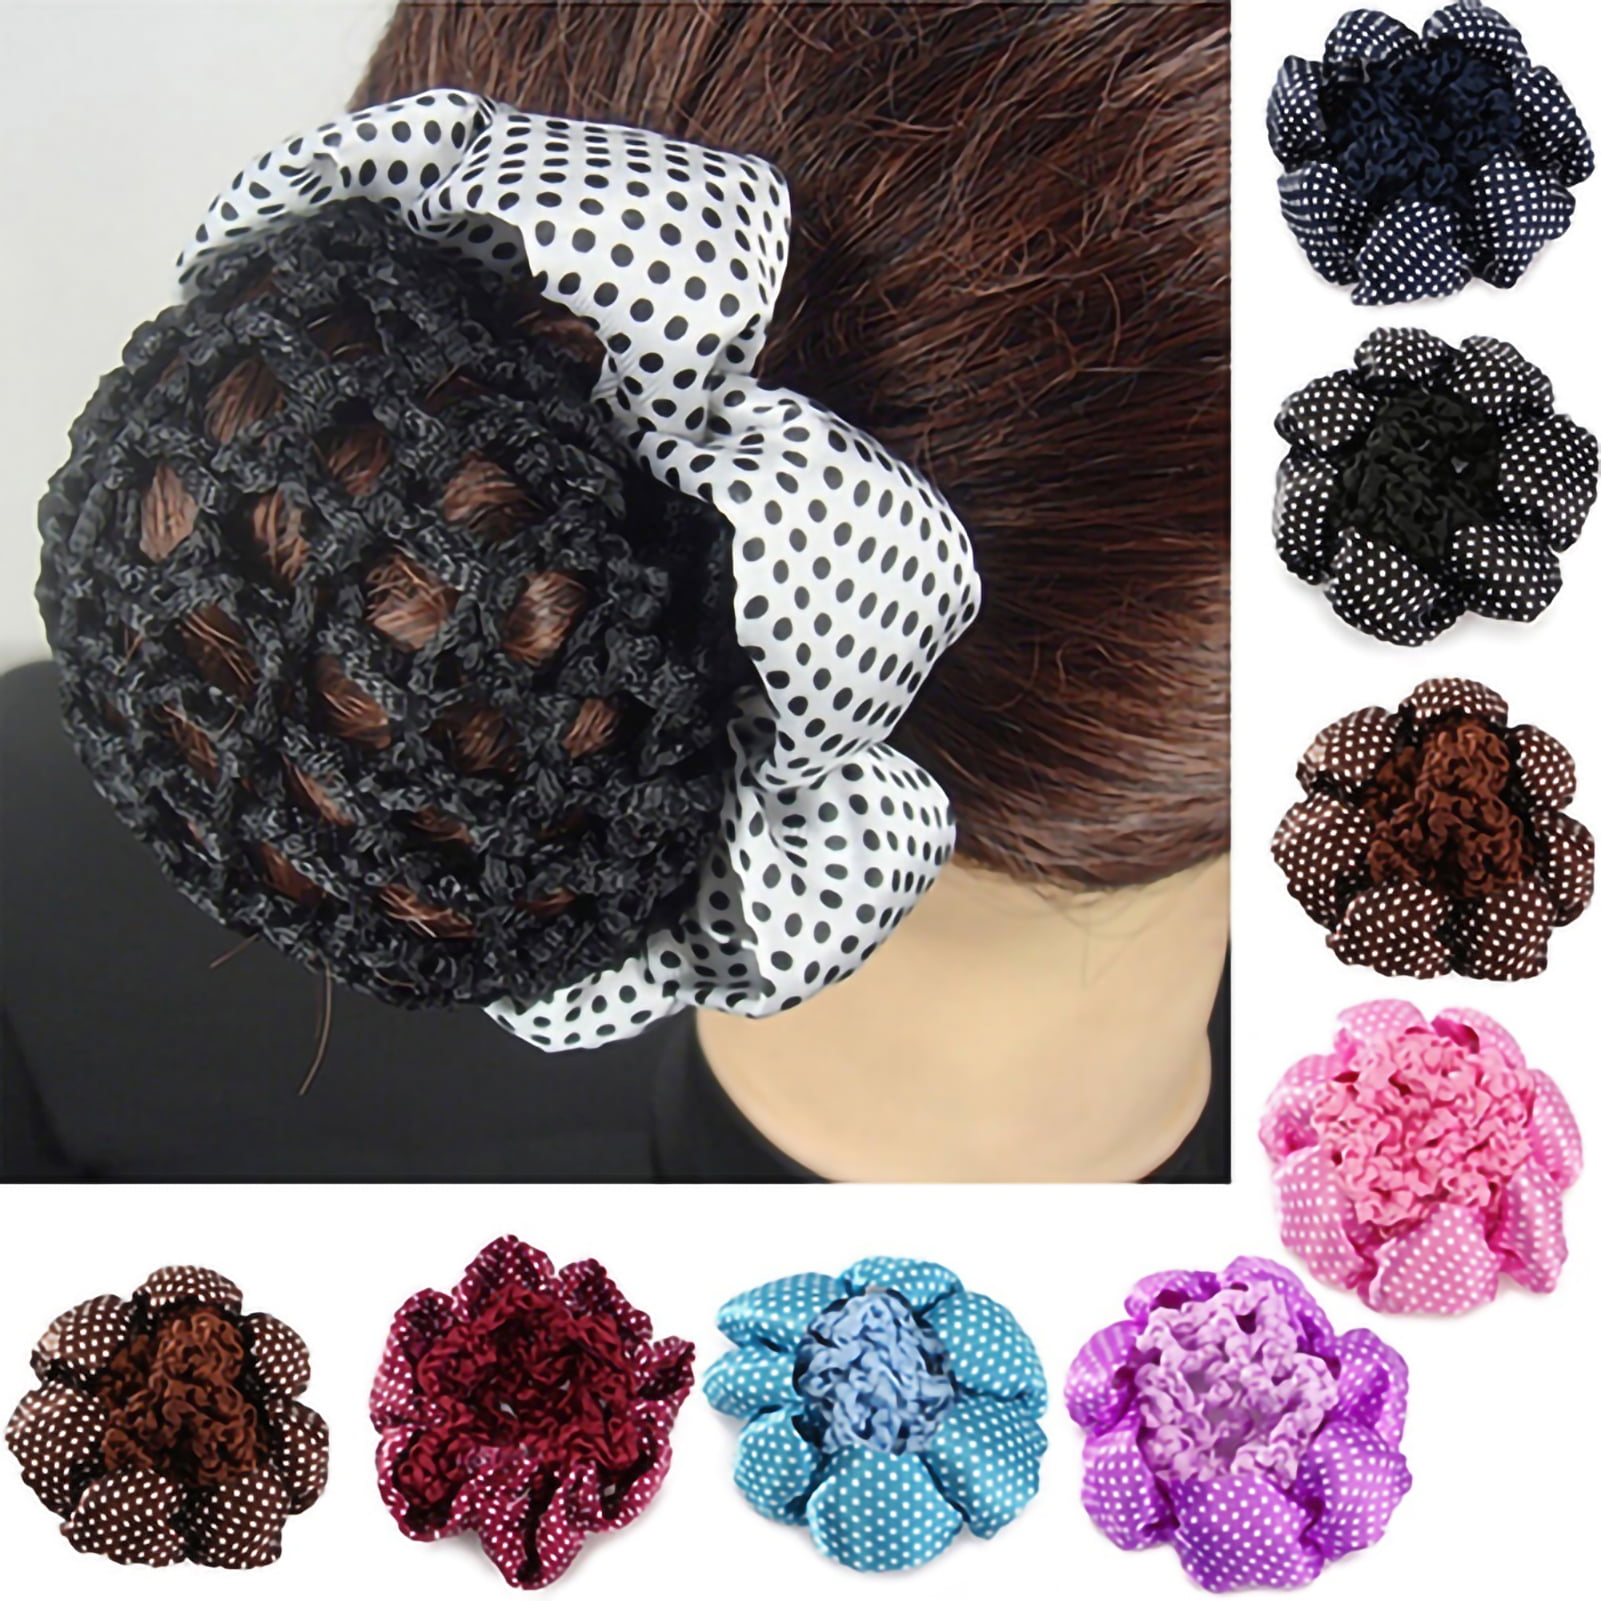 Beauty Crochet Hair Net Pearl Mesh Ballet Snood Bun Cover Hair Styling Tool